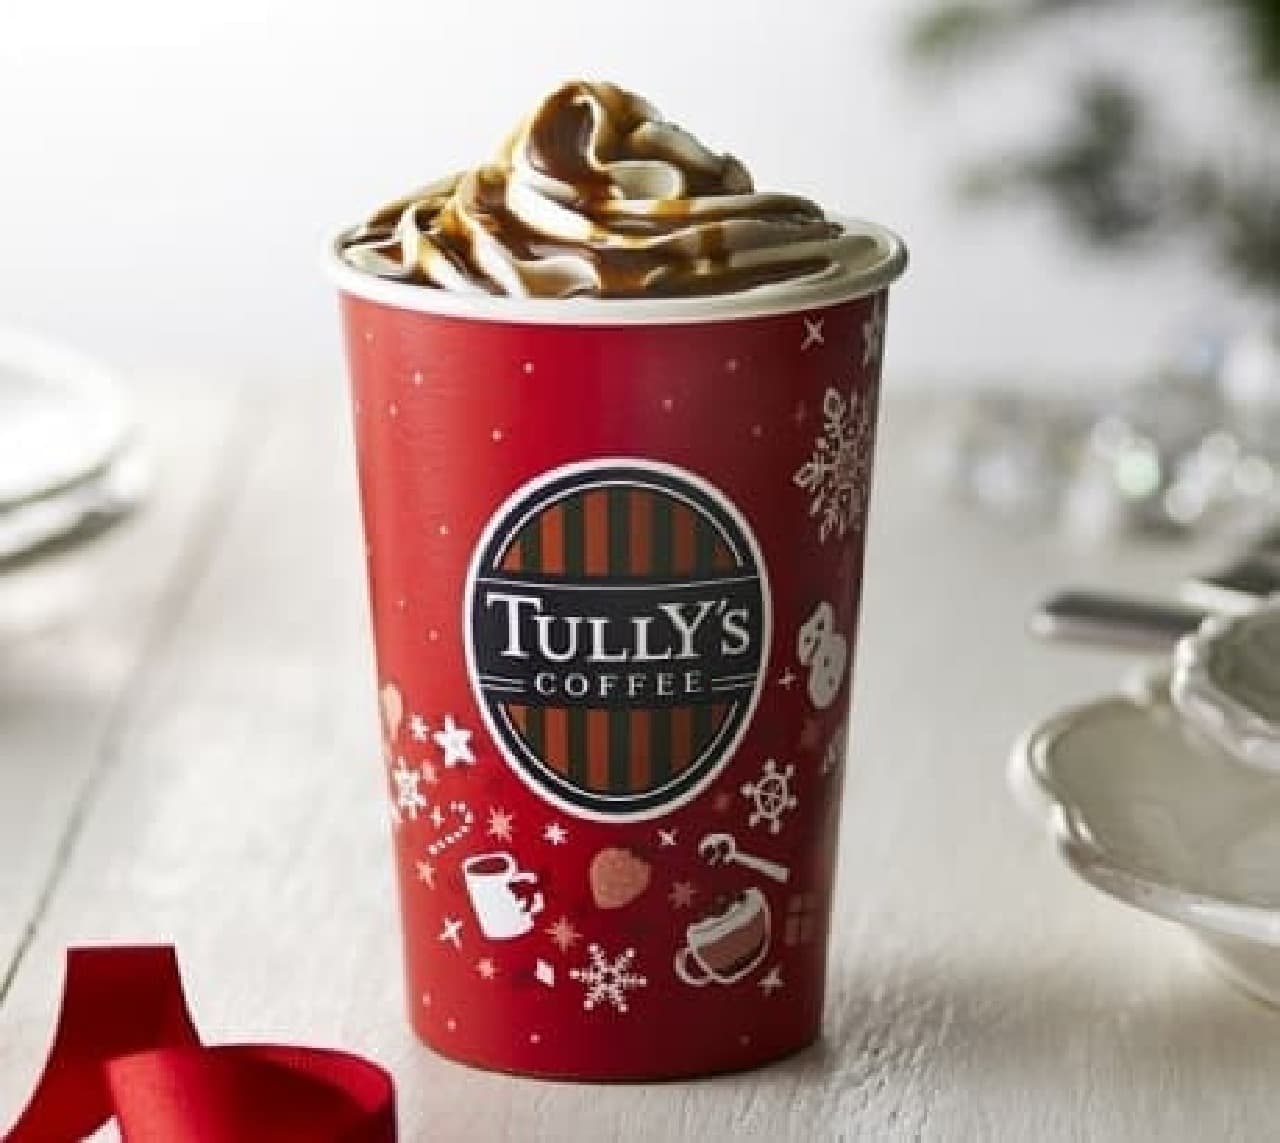 Tully's Coffee "Irish Latte"